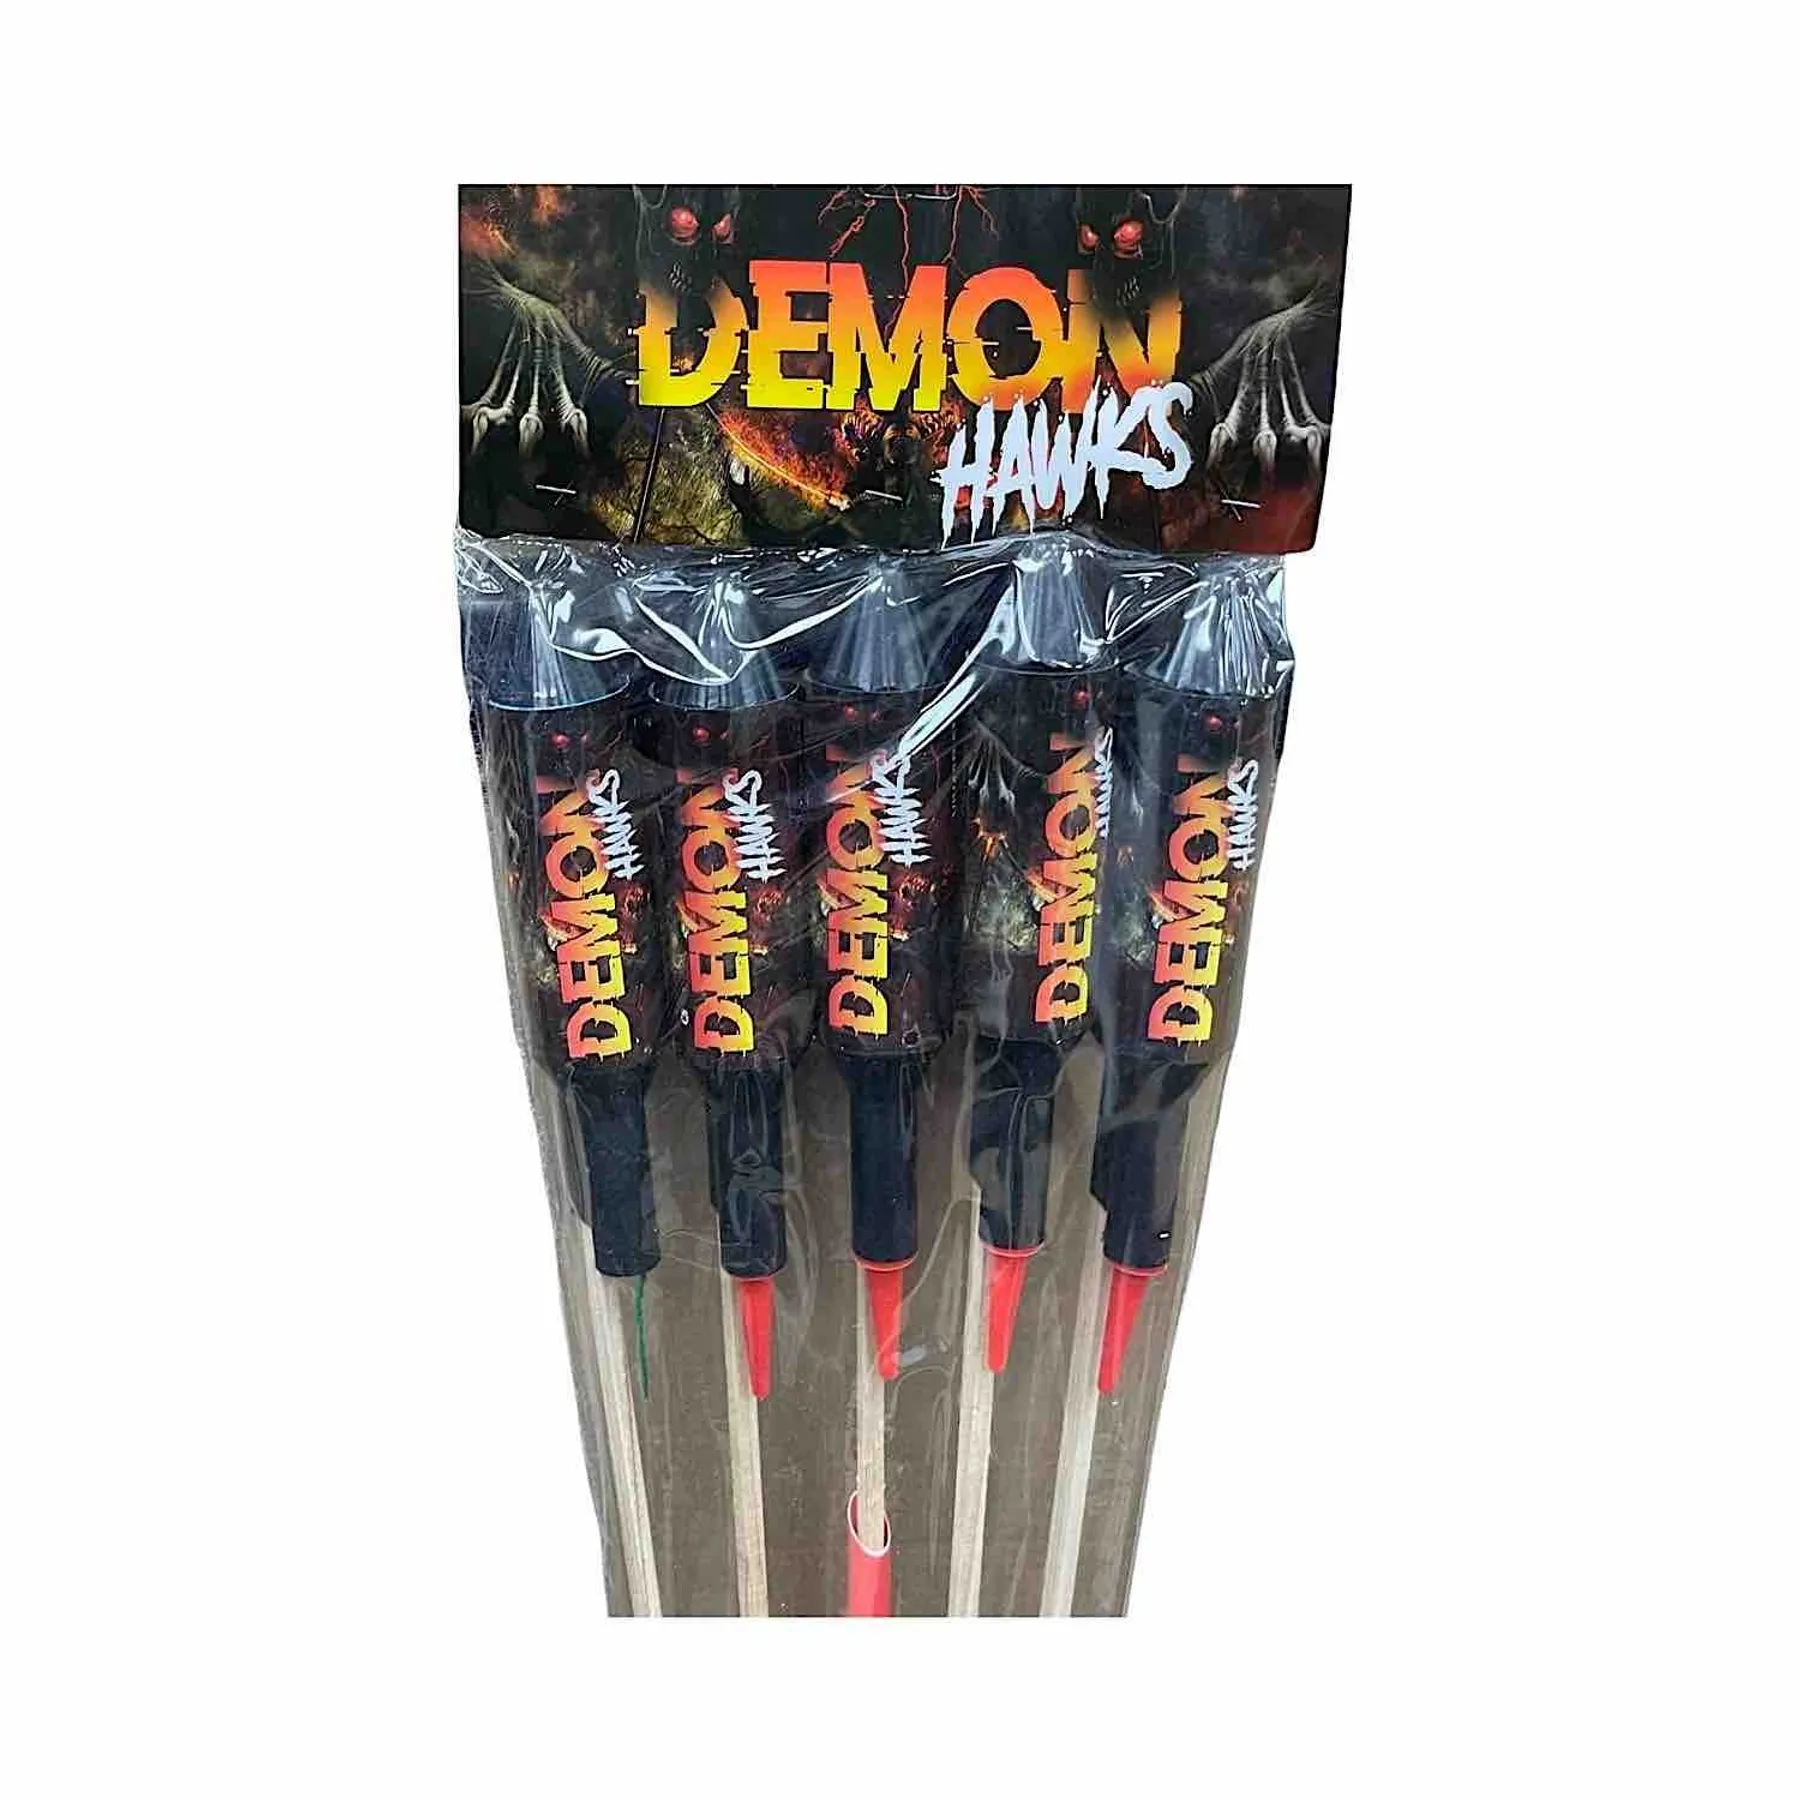 Demon Hawks Rockets 5 pack by Vivid Pyrotechnics